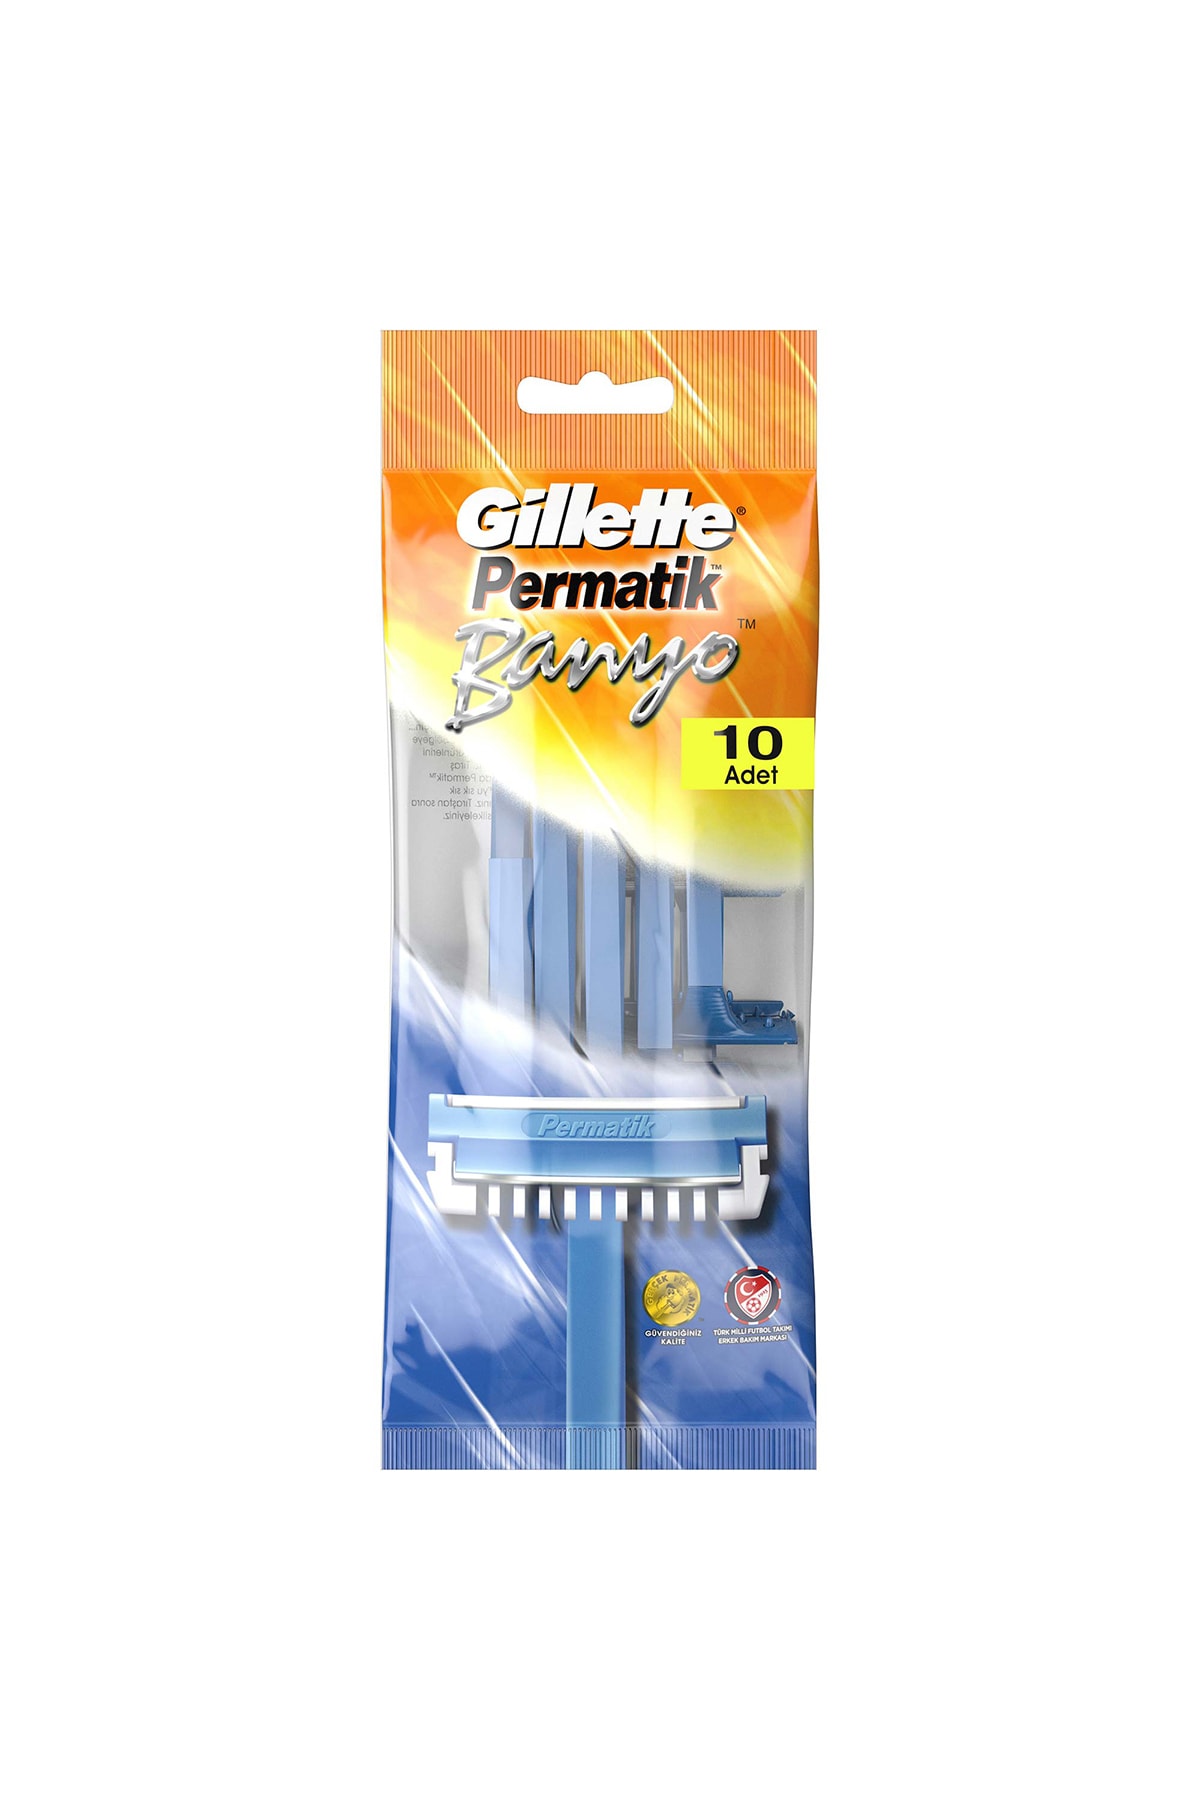 Gillette Banyo Kullan At Tıraş Bıçağı 10'lu